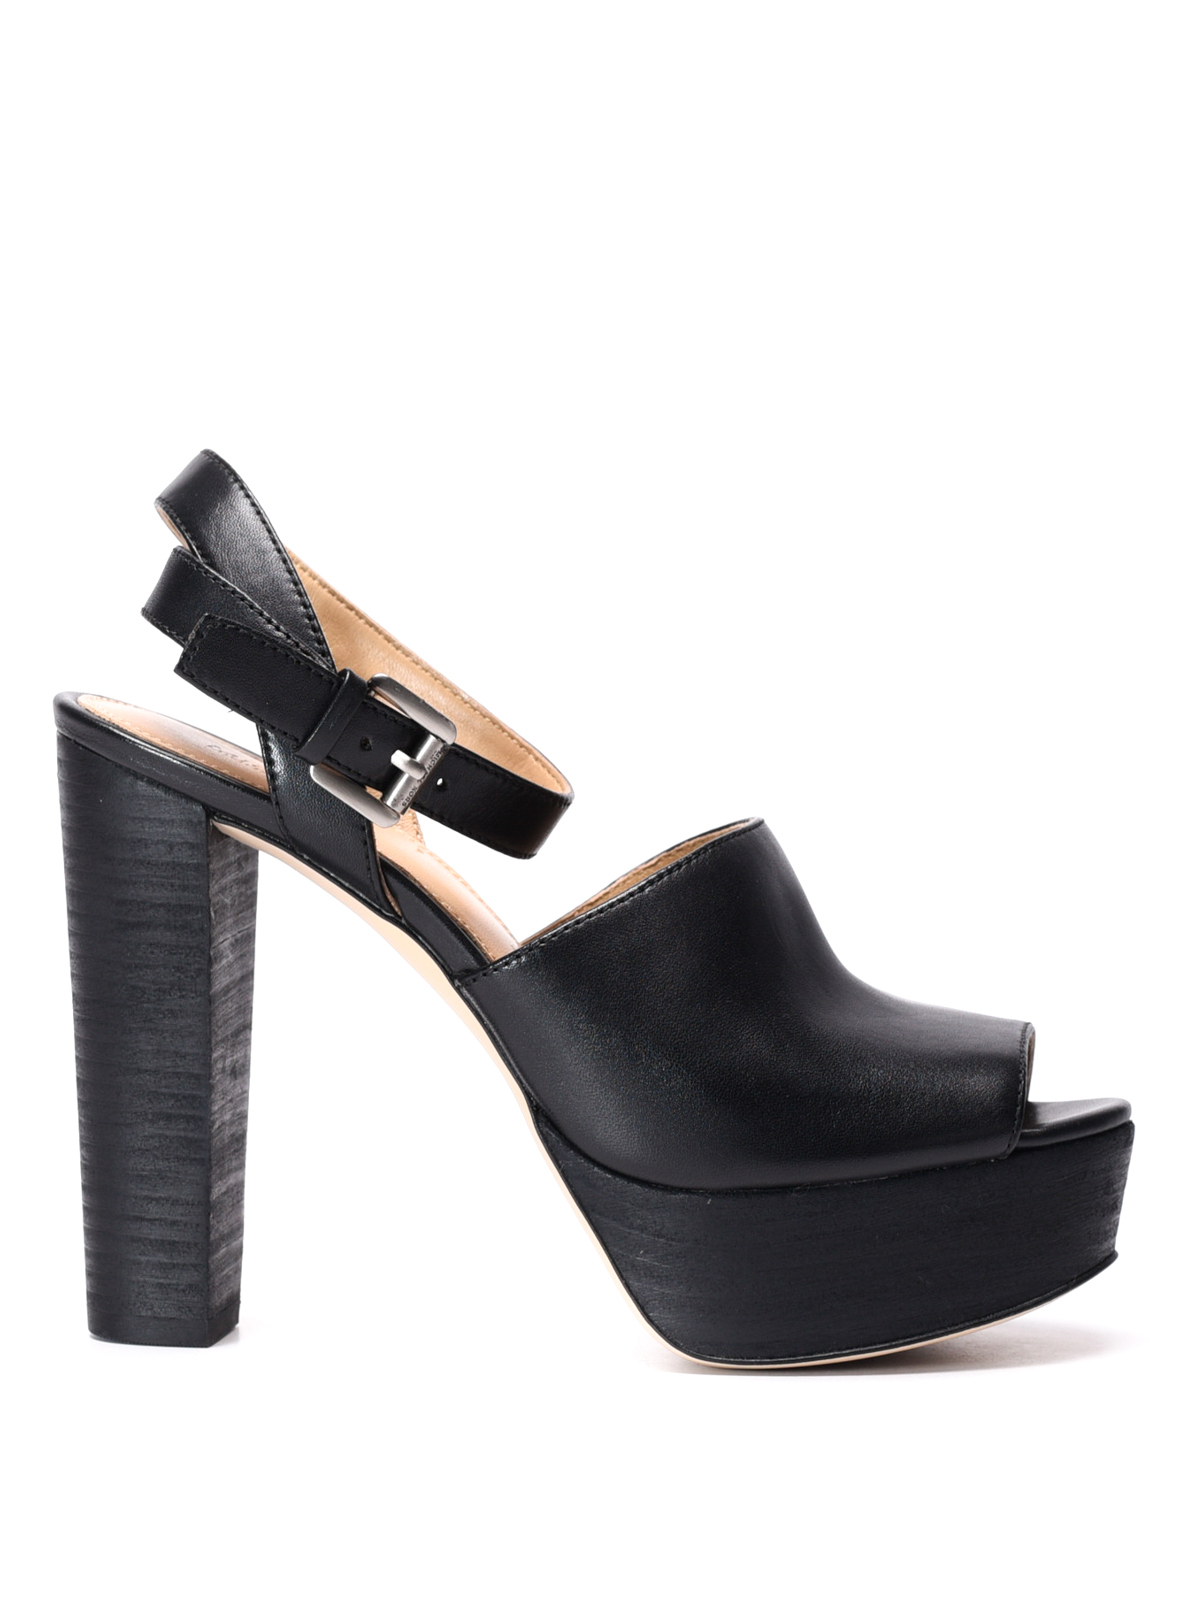 Sandals Michael Kors - Trina platform leather sandals - 40R7TNMS1L001